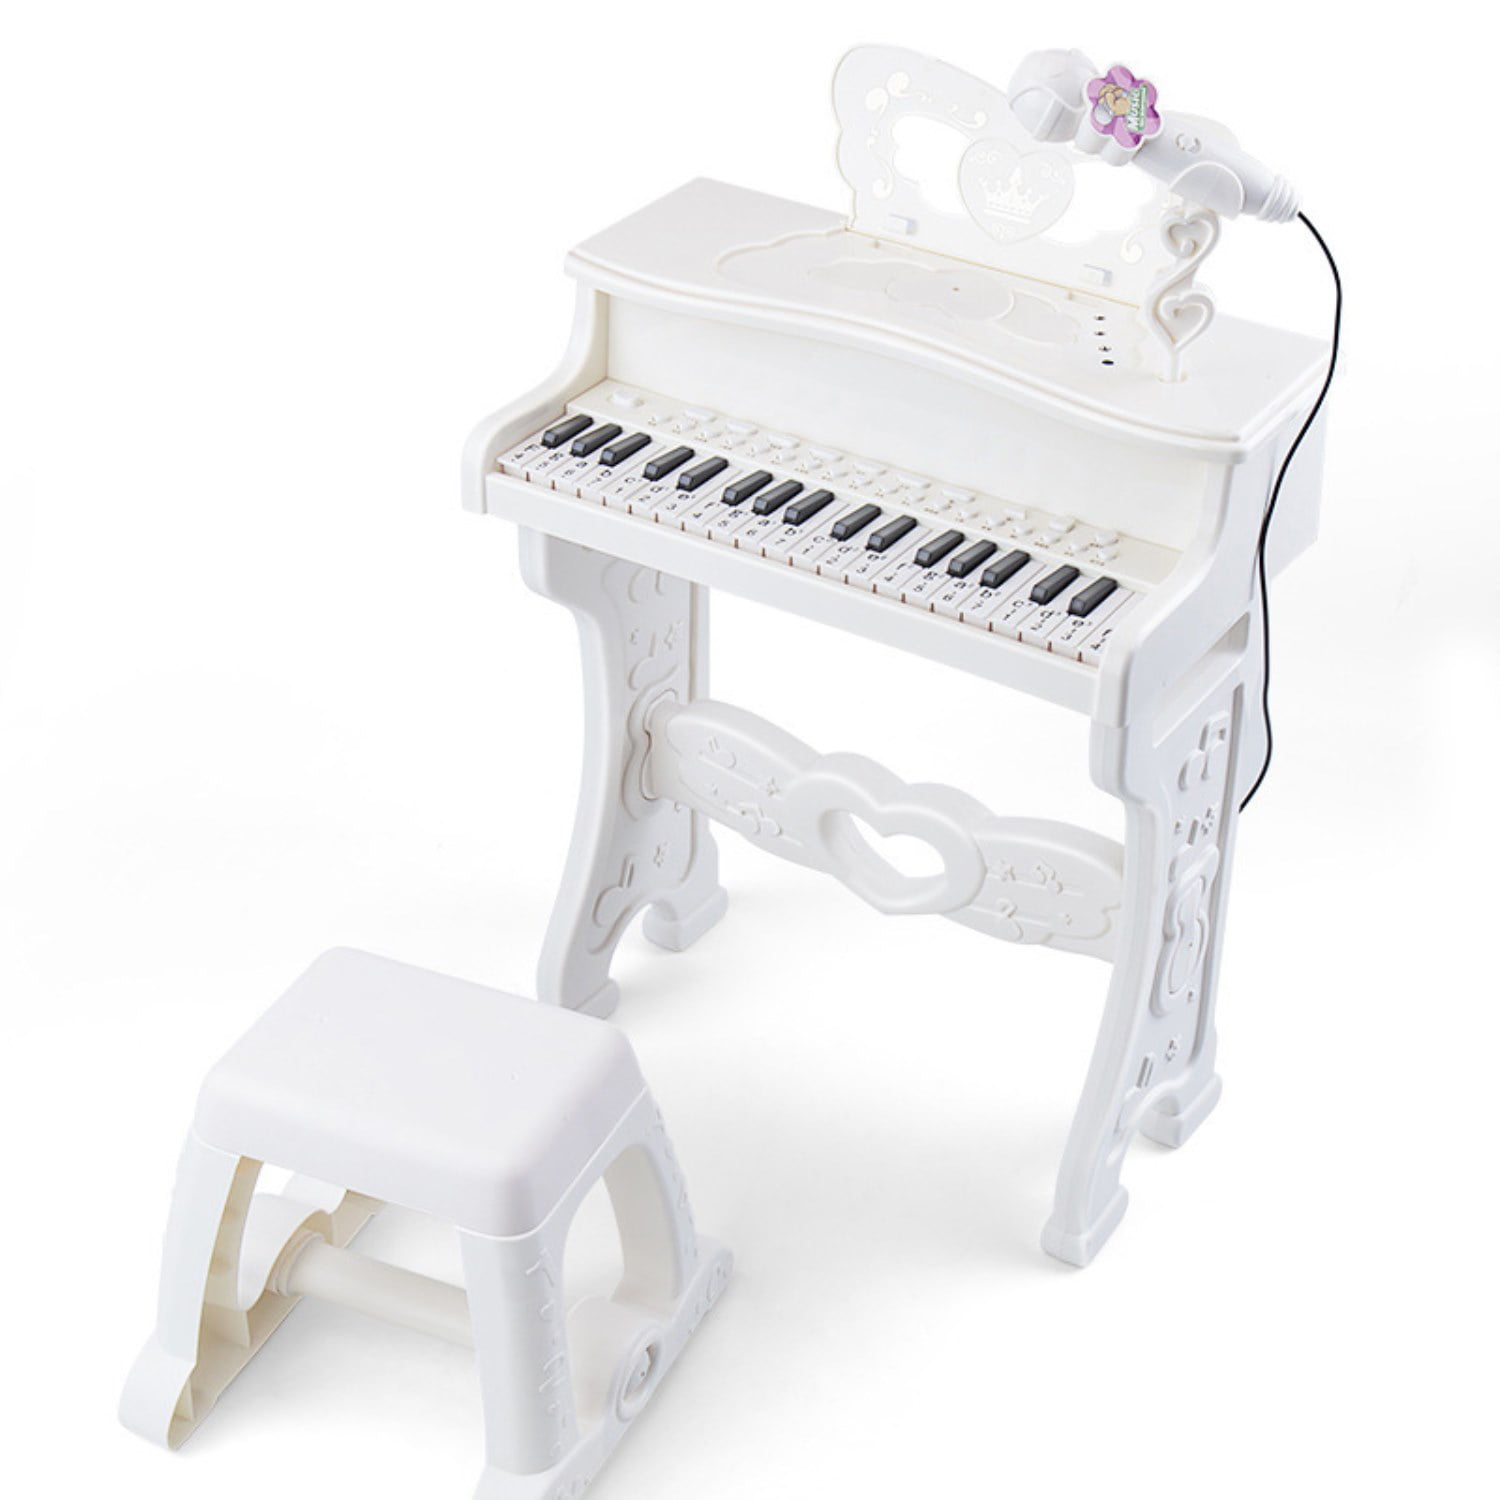 37 Key Grand Kids Play Piano Keyboard Electronic W/Microphone  & Stool White 